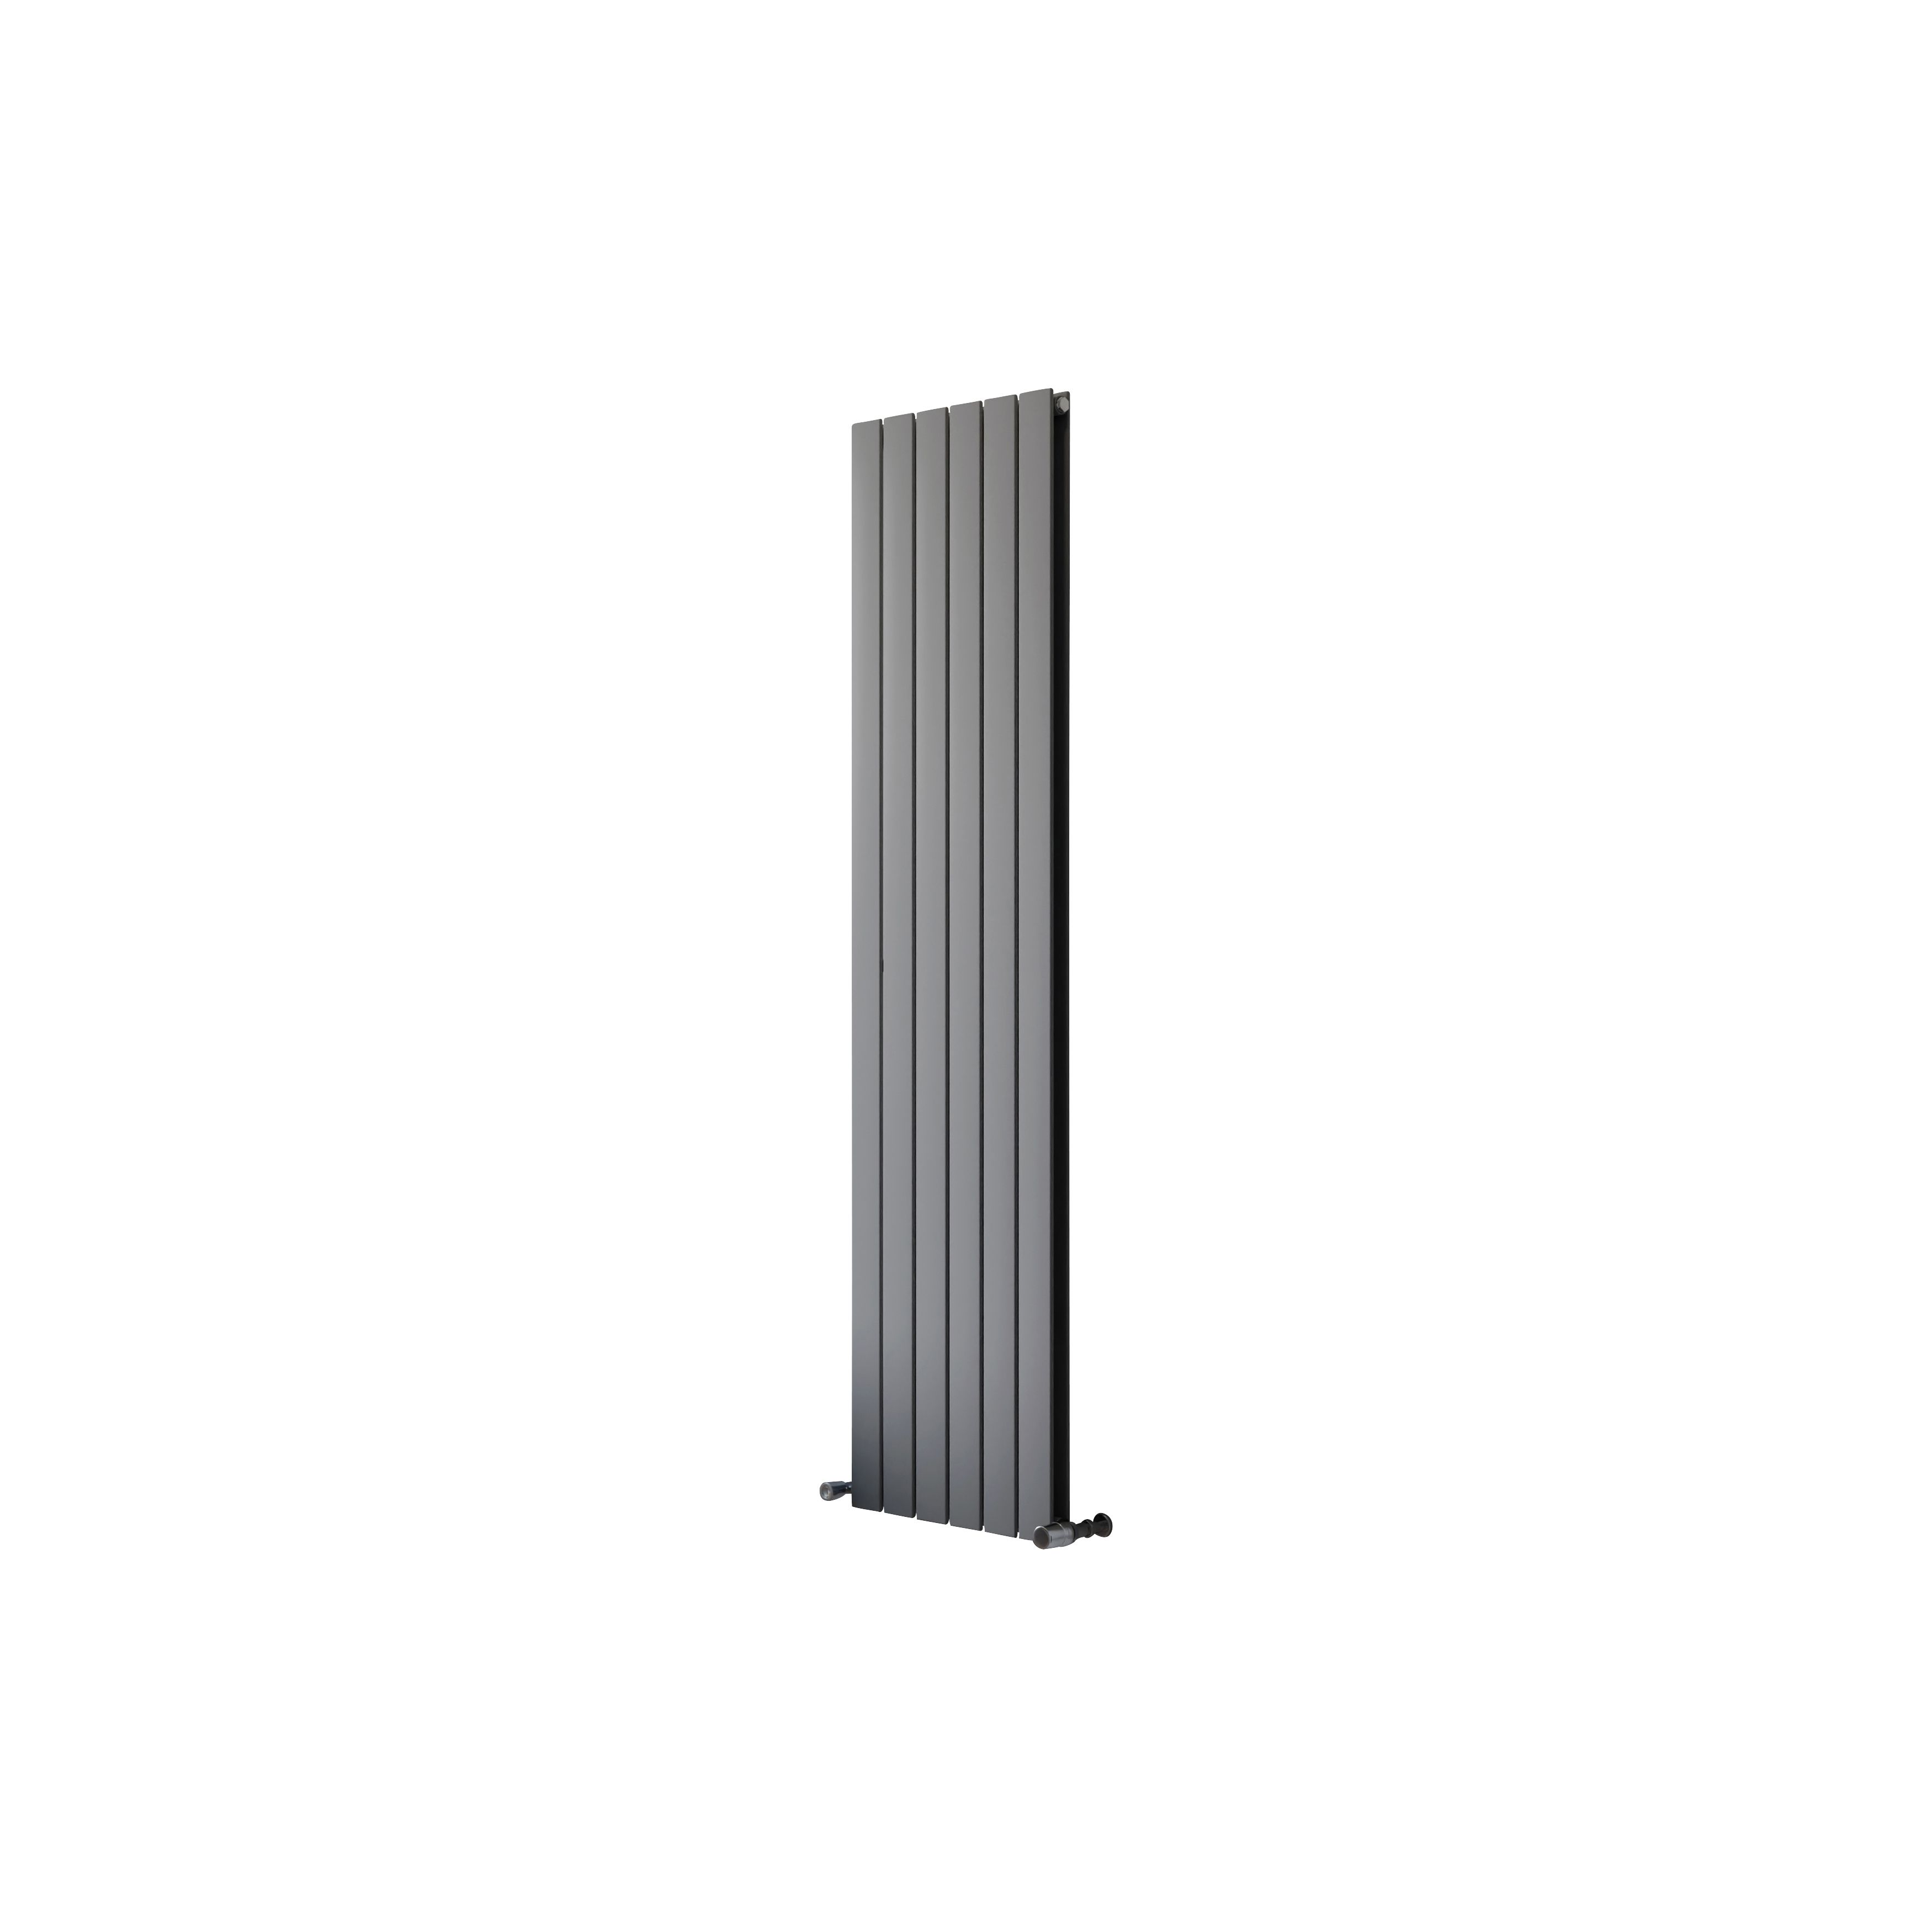 Ximax Vertirad Duplex Silver effect Horizontal or vertical Designer Radiator, (W)445mm x (H)1800mm